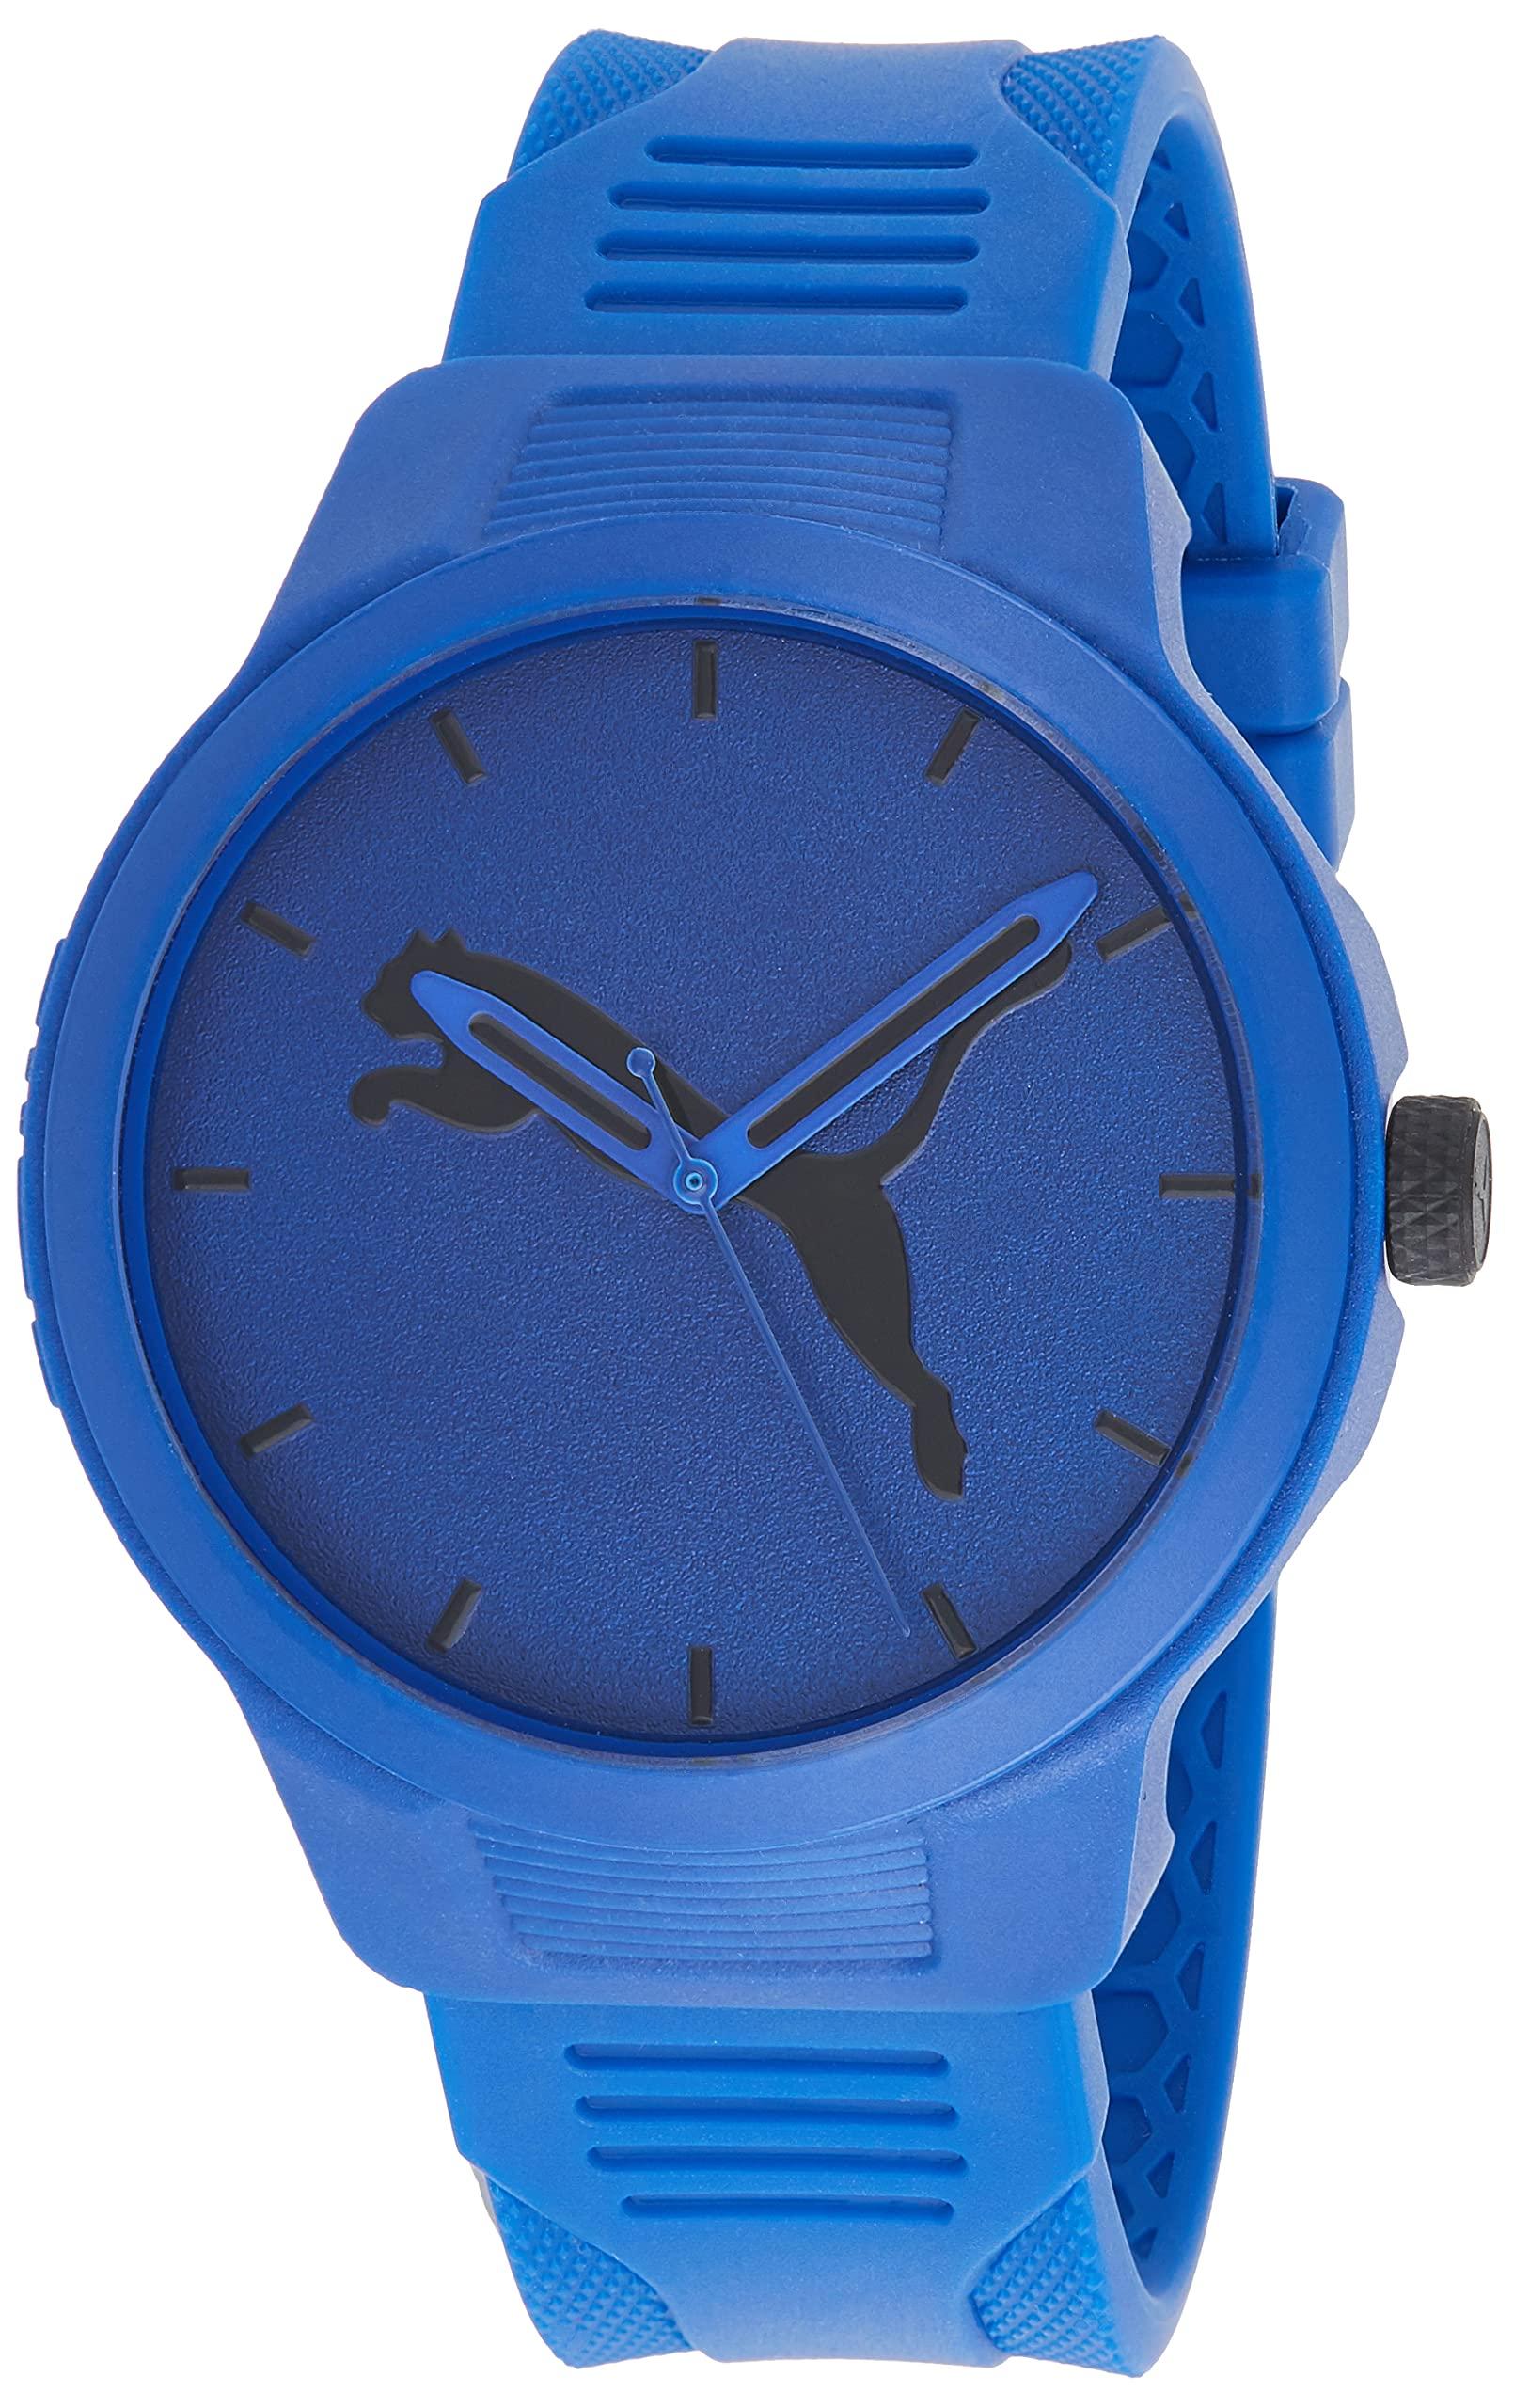 PUMA Reset V2 Polyurethane Watch in Black (Blue) for Men - Save 66% - Lyst